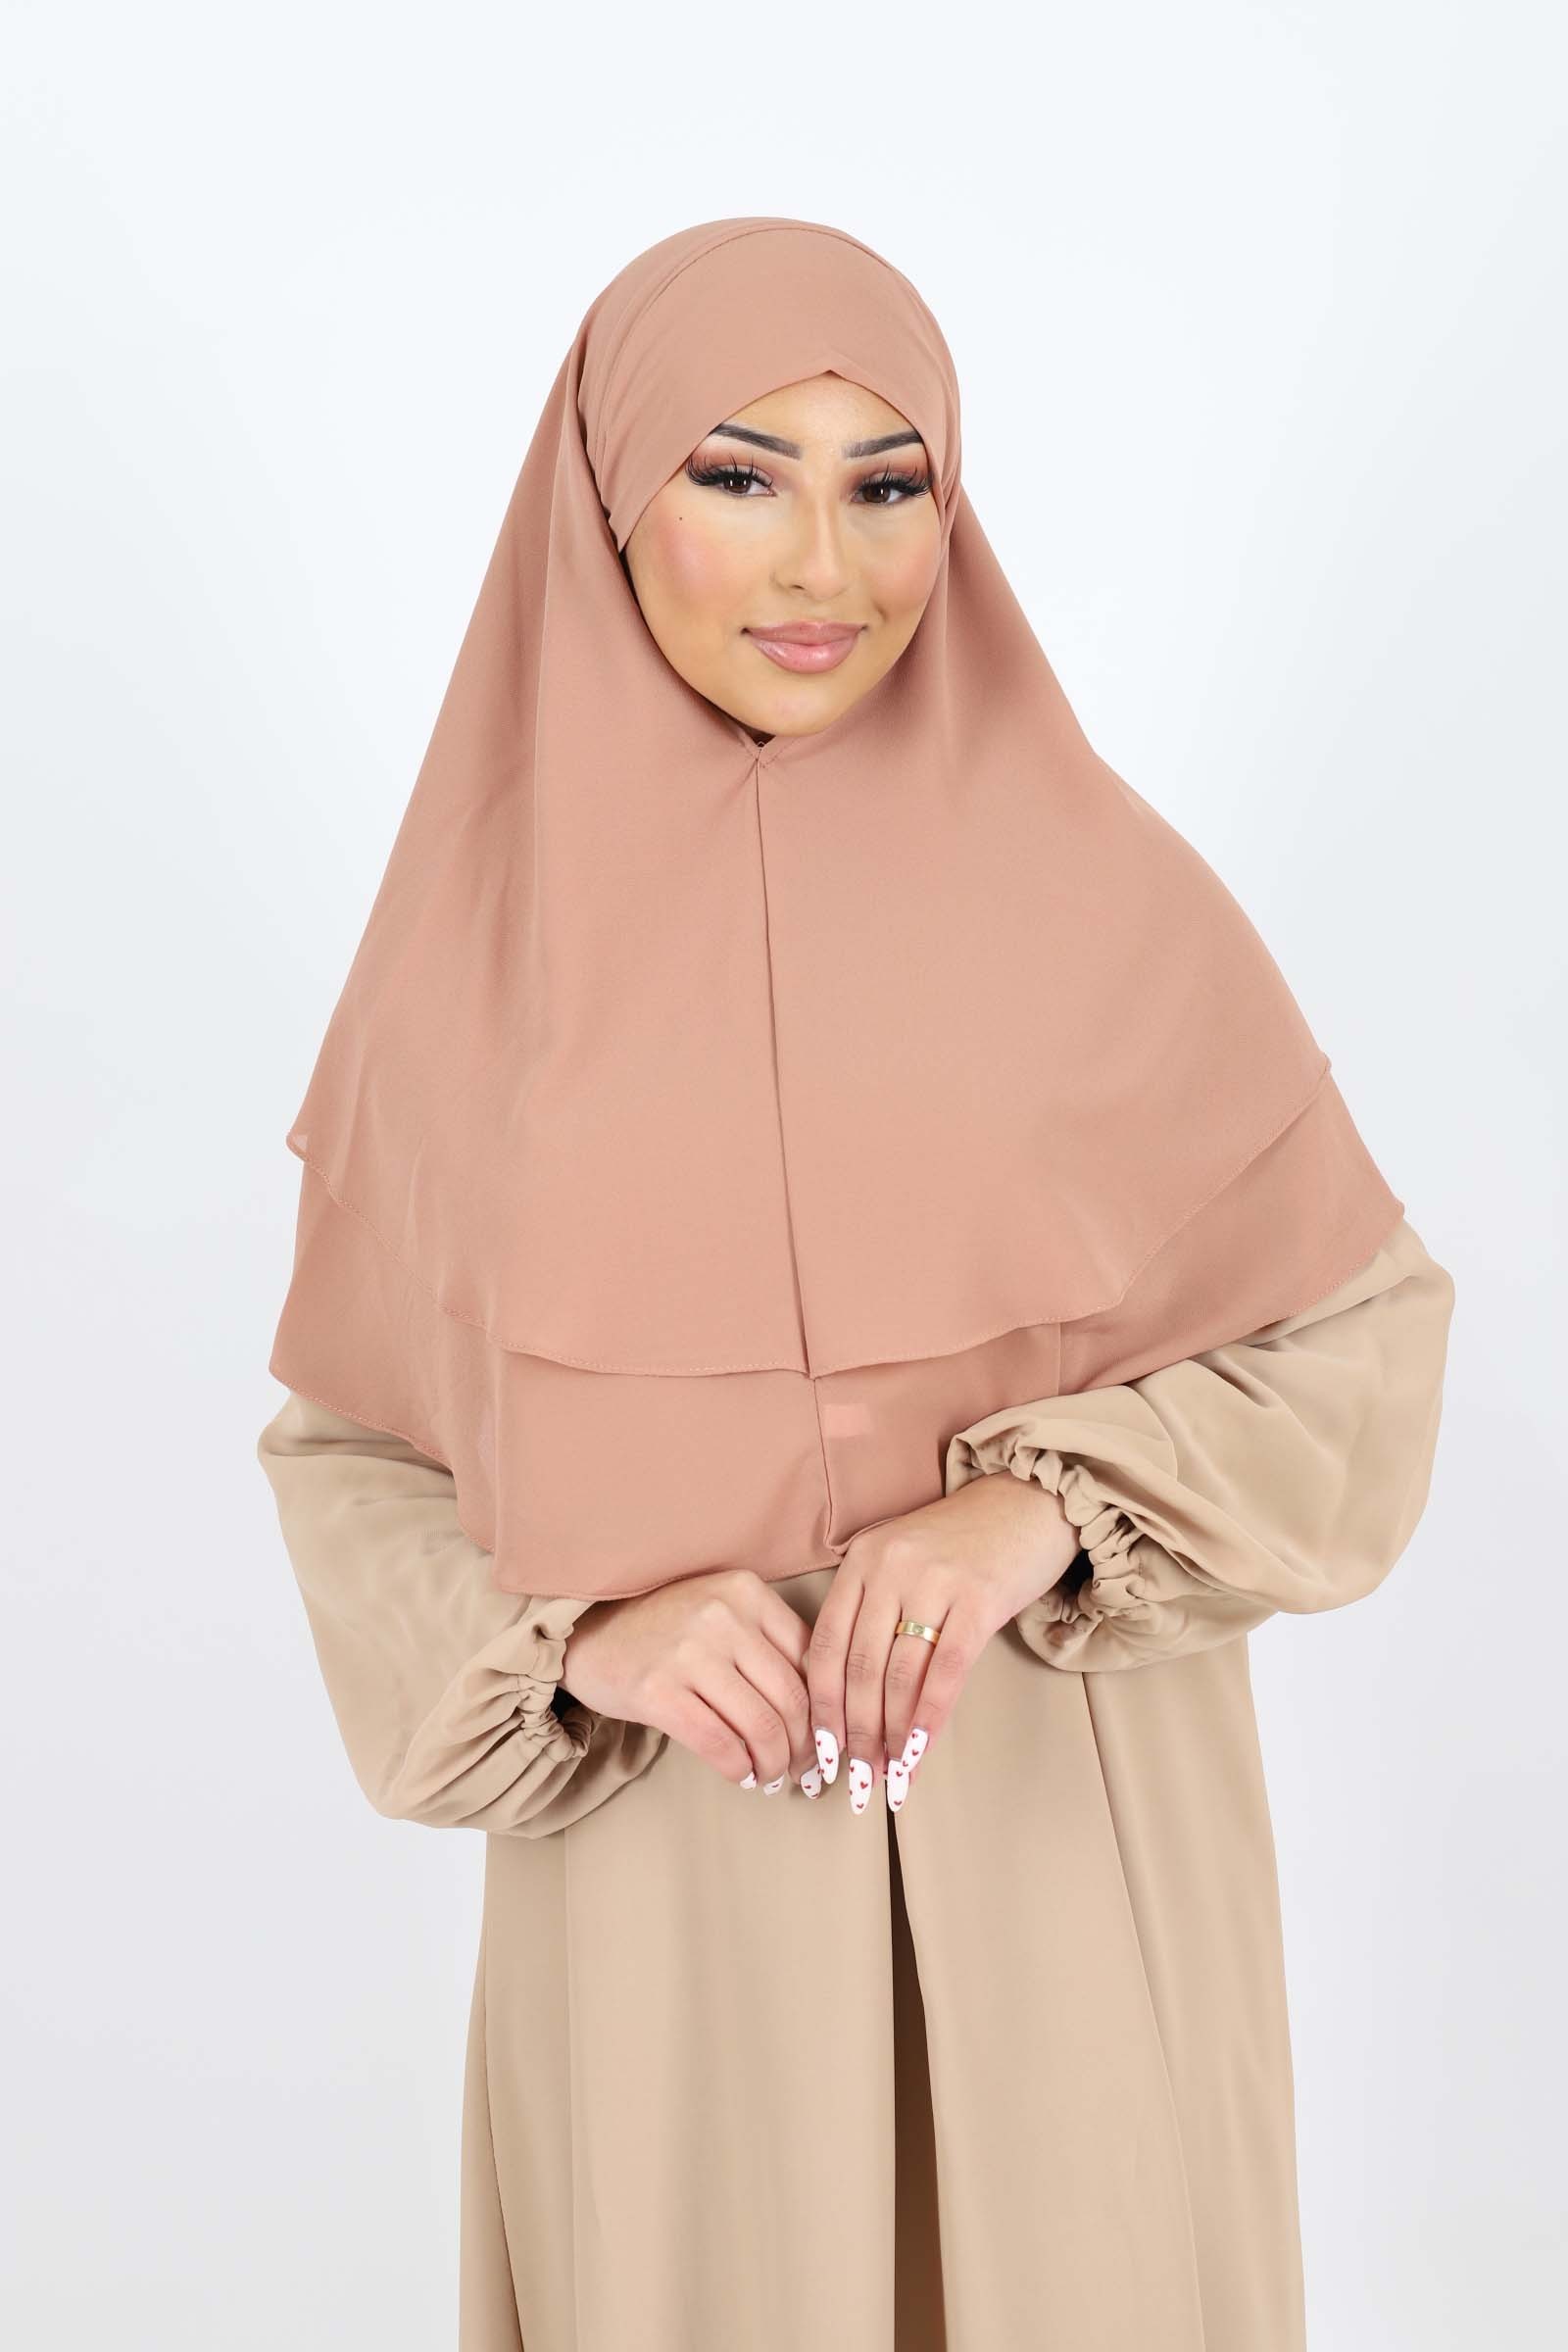 Khimar muslin 2 veils veiled woman hijab cheap